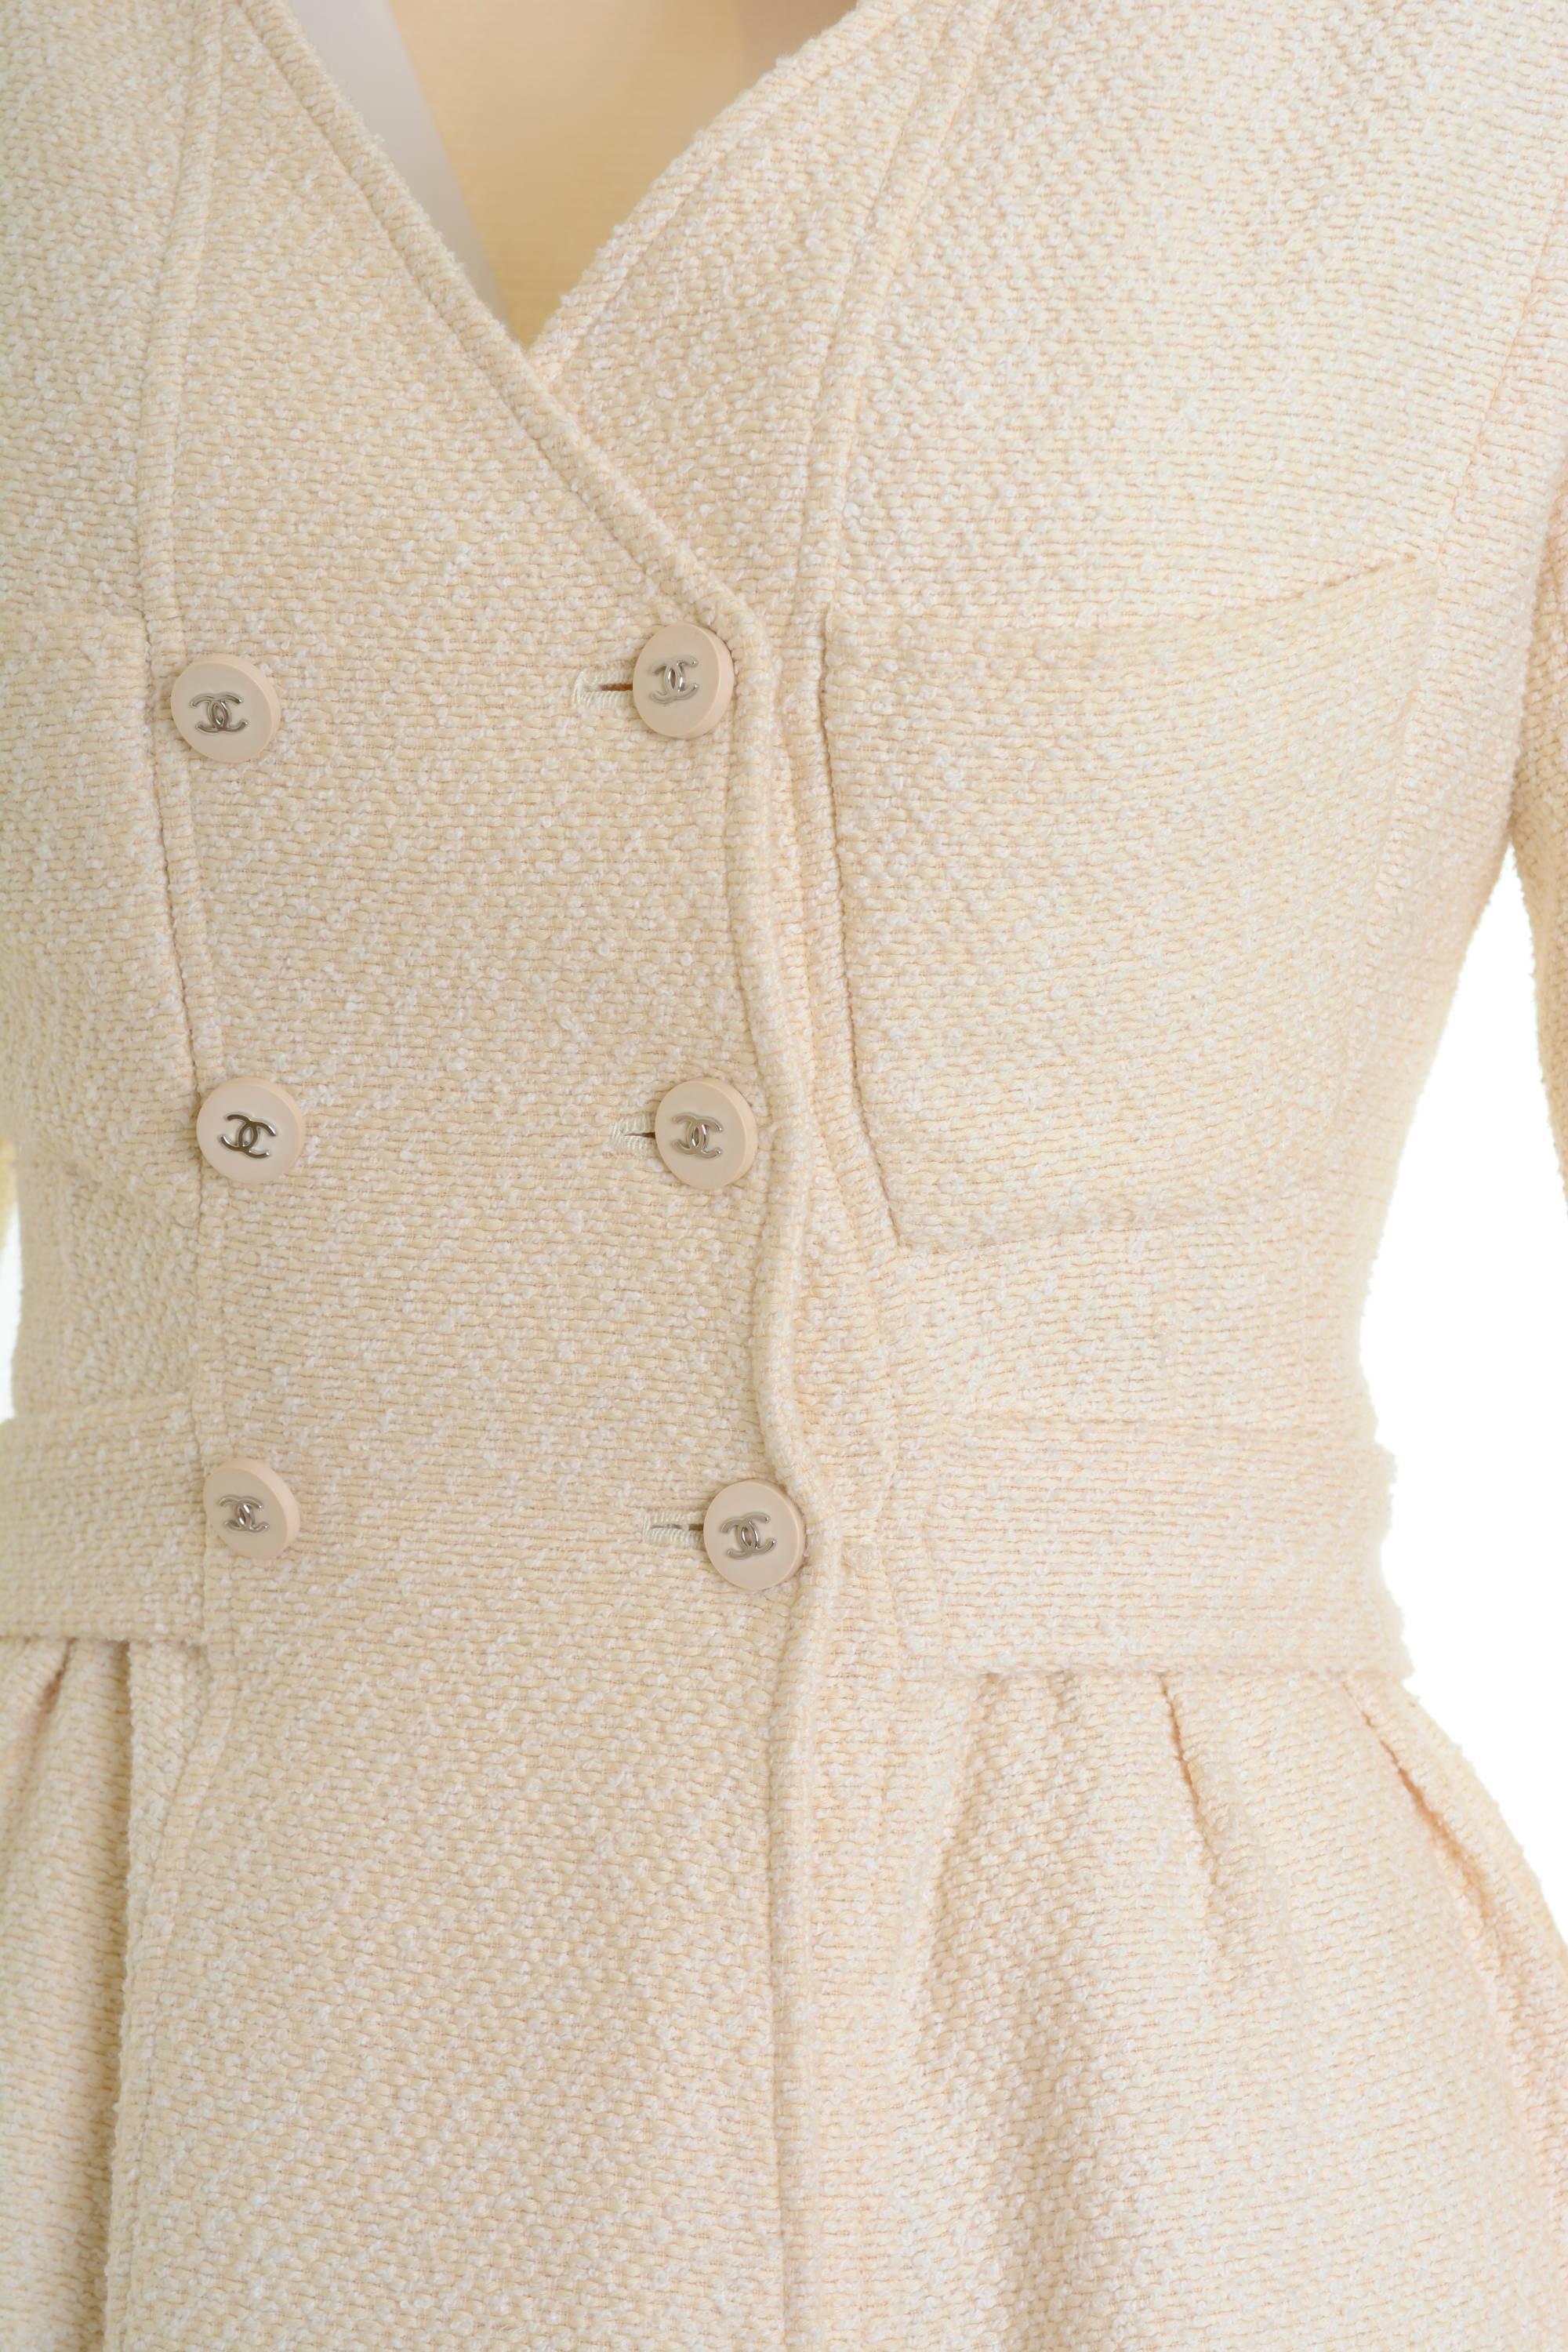 Beige 1990s Chanel Boutique Cream Wool Coat/Dress